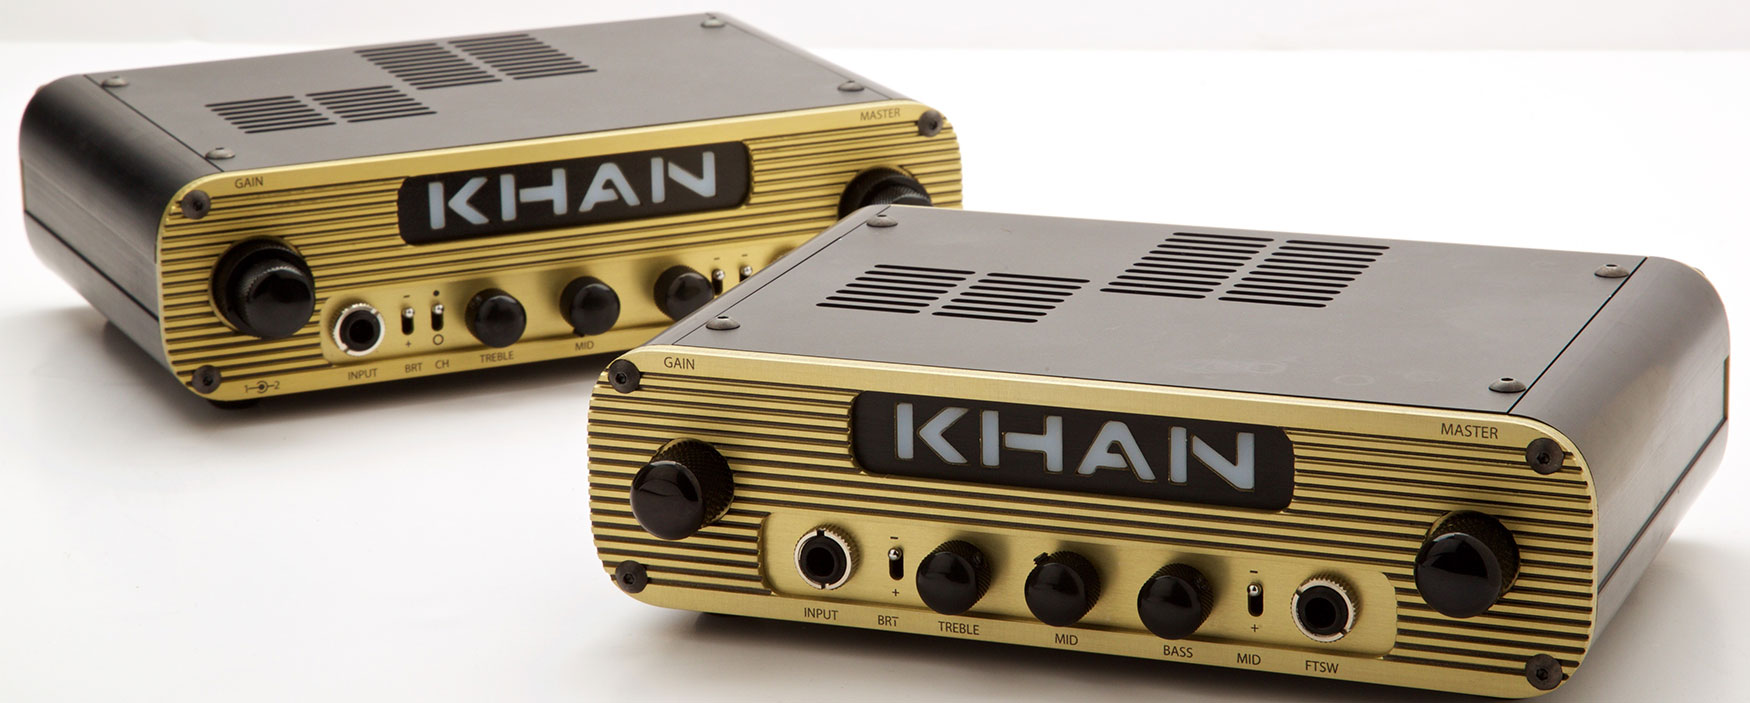 Khan Audio Introduces New Pak Guitar Amplifier | Guitar World